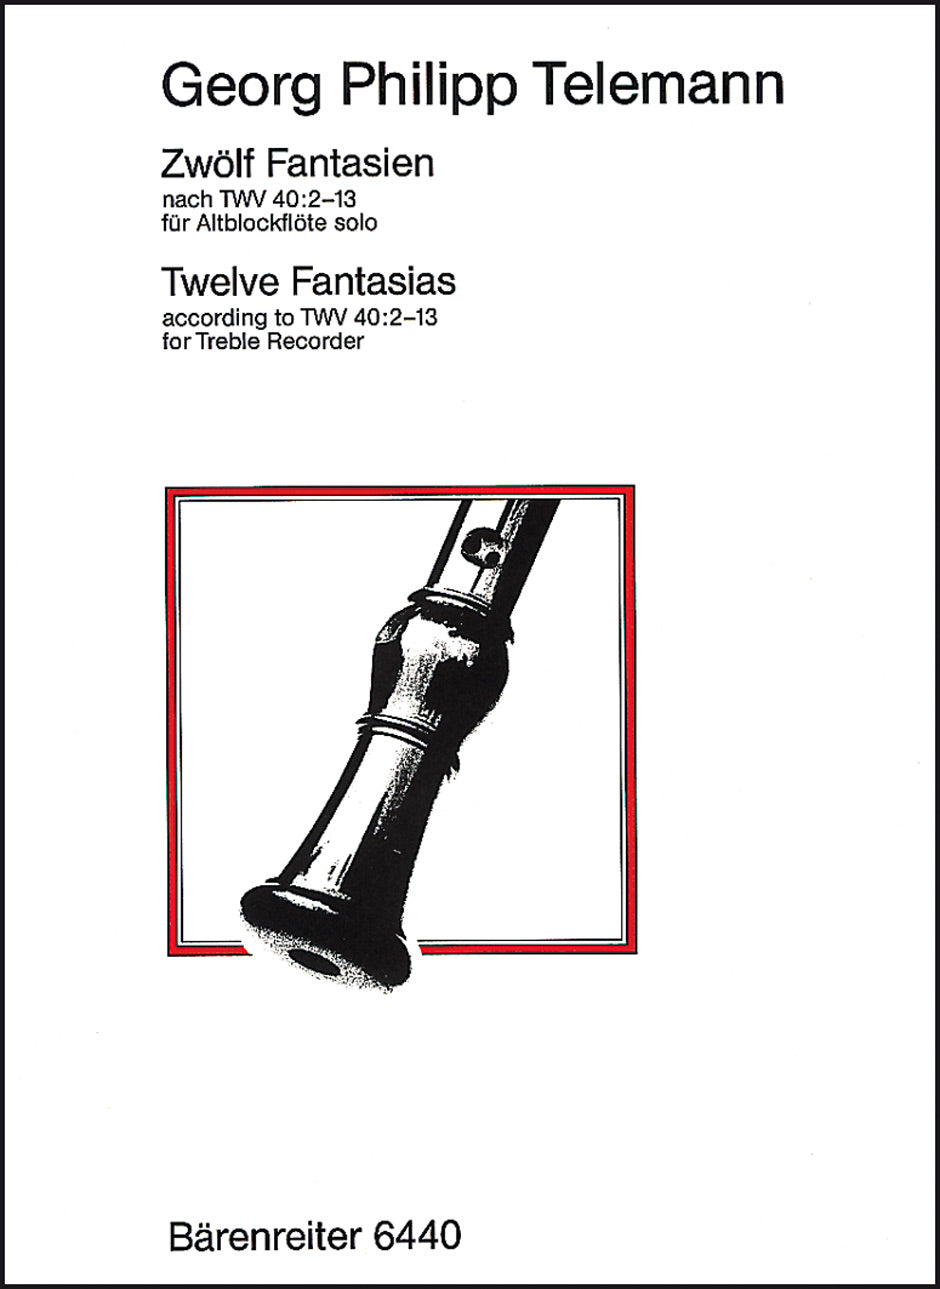 Telemann: Twelve Fantasias for Treble Recorder After TWV 40:2-13